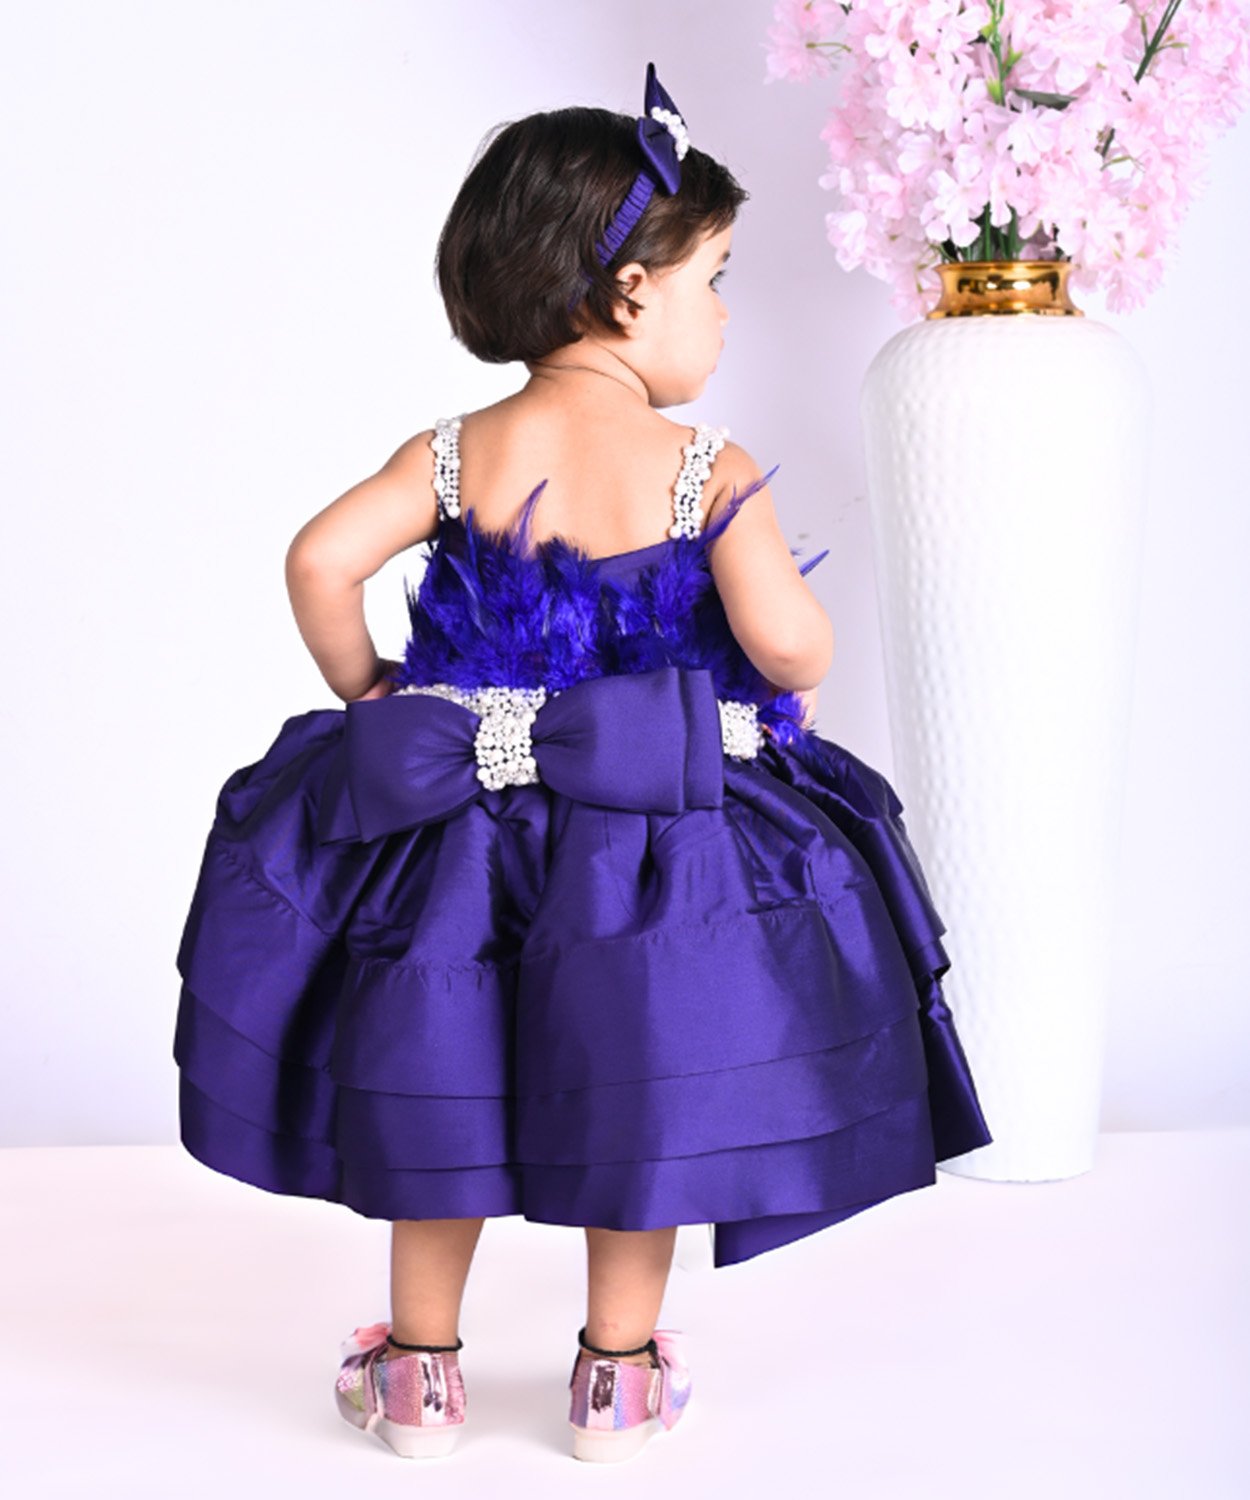 Royal Blue, Sleeveless Dress With A Layered Skirt